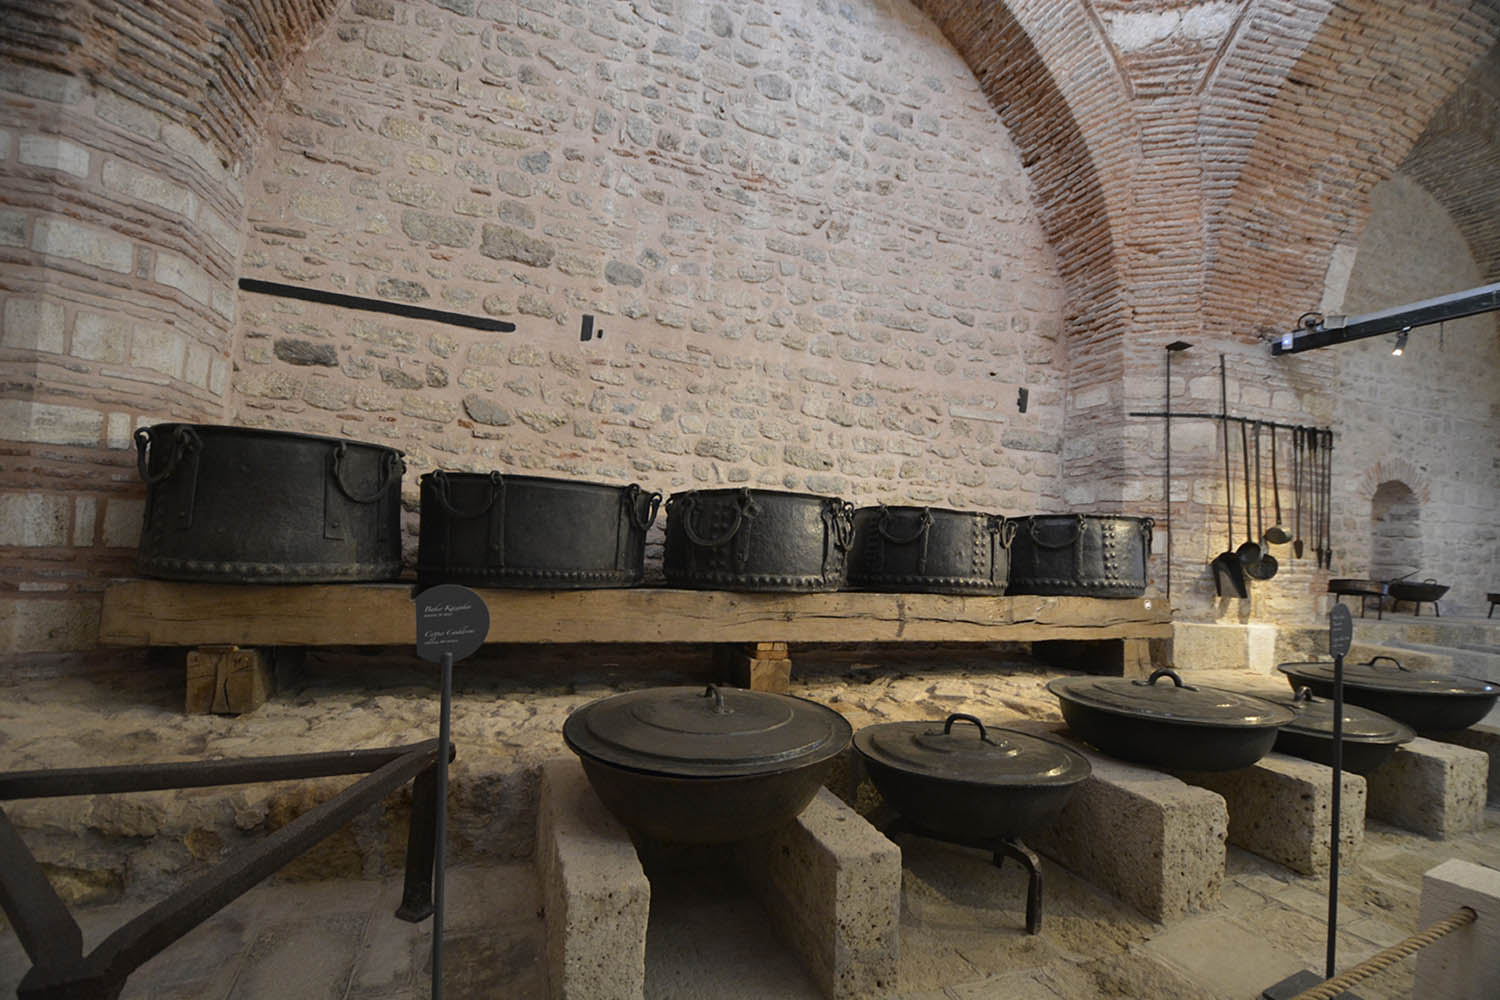 Interior view of the kitchens in Topkapı Sarayı.